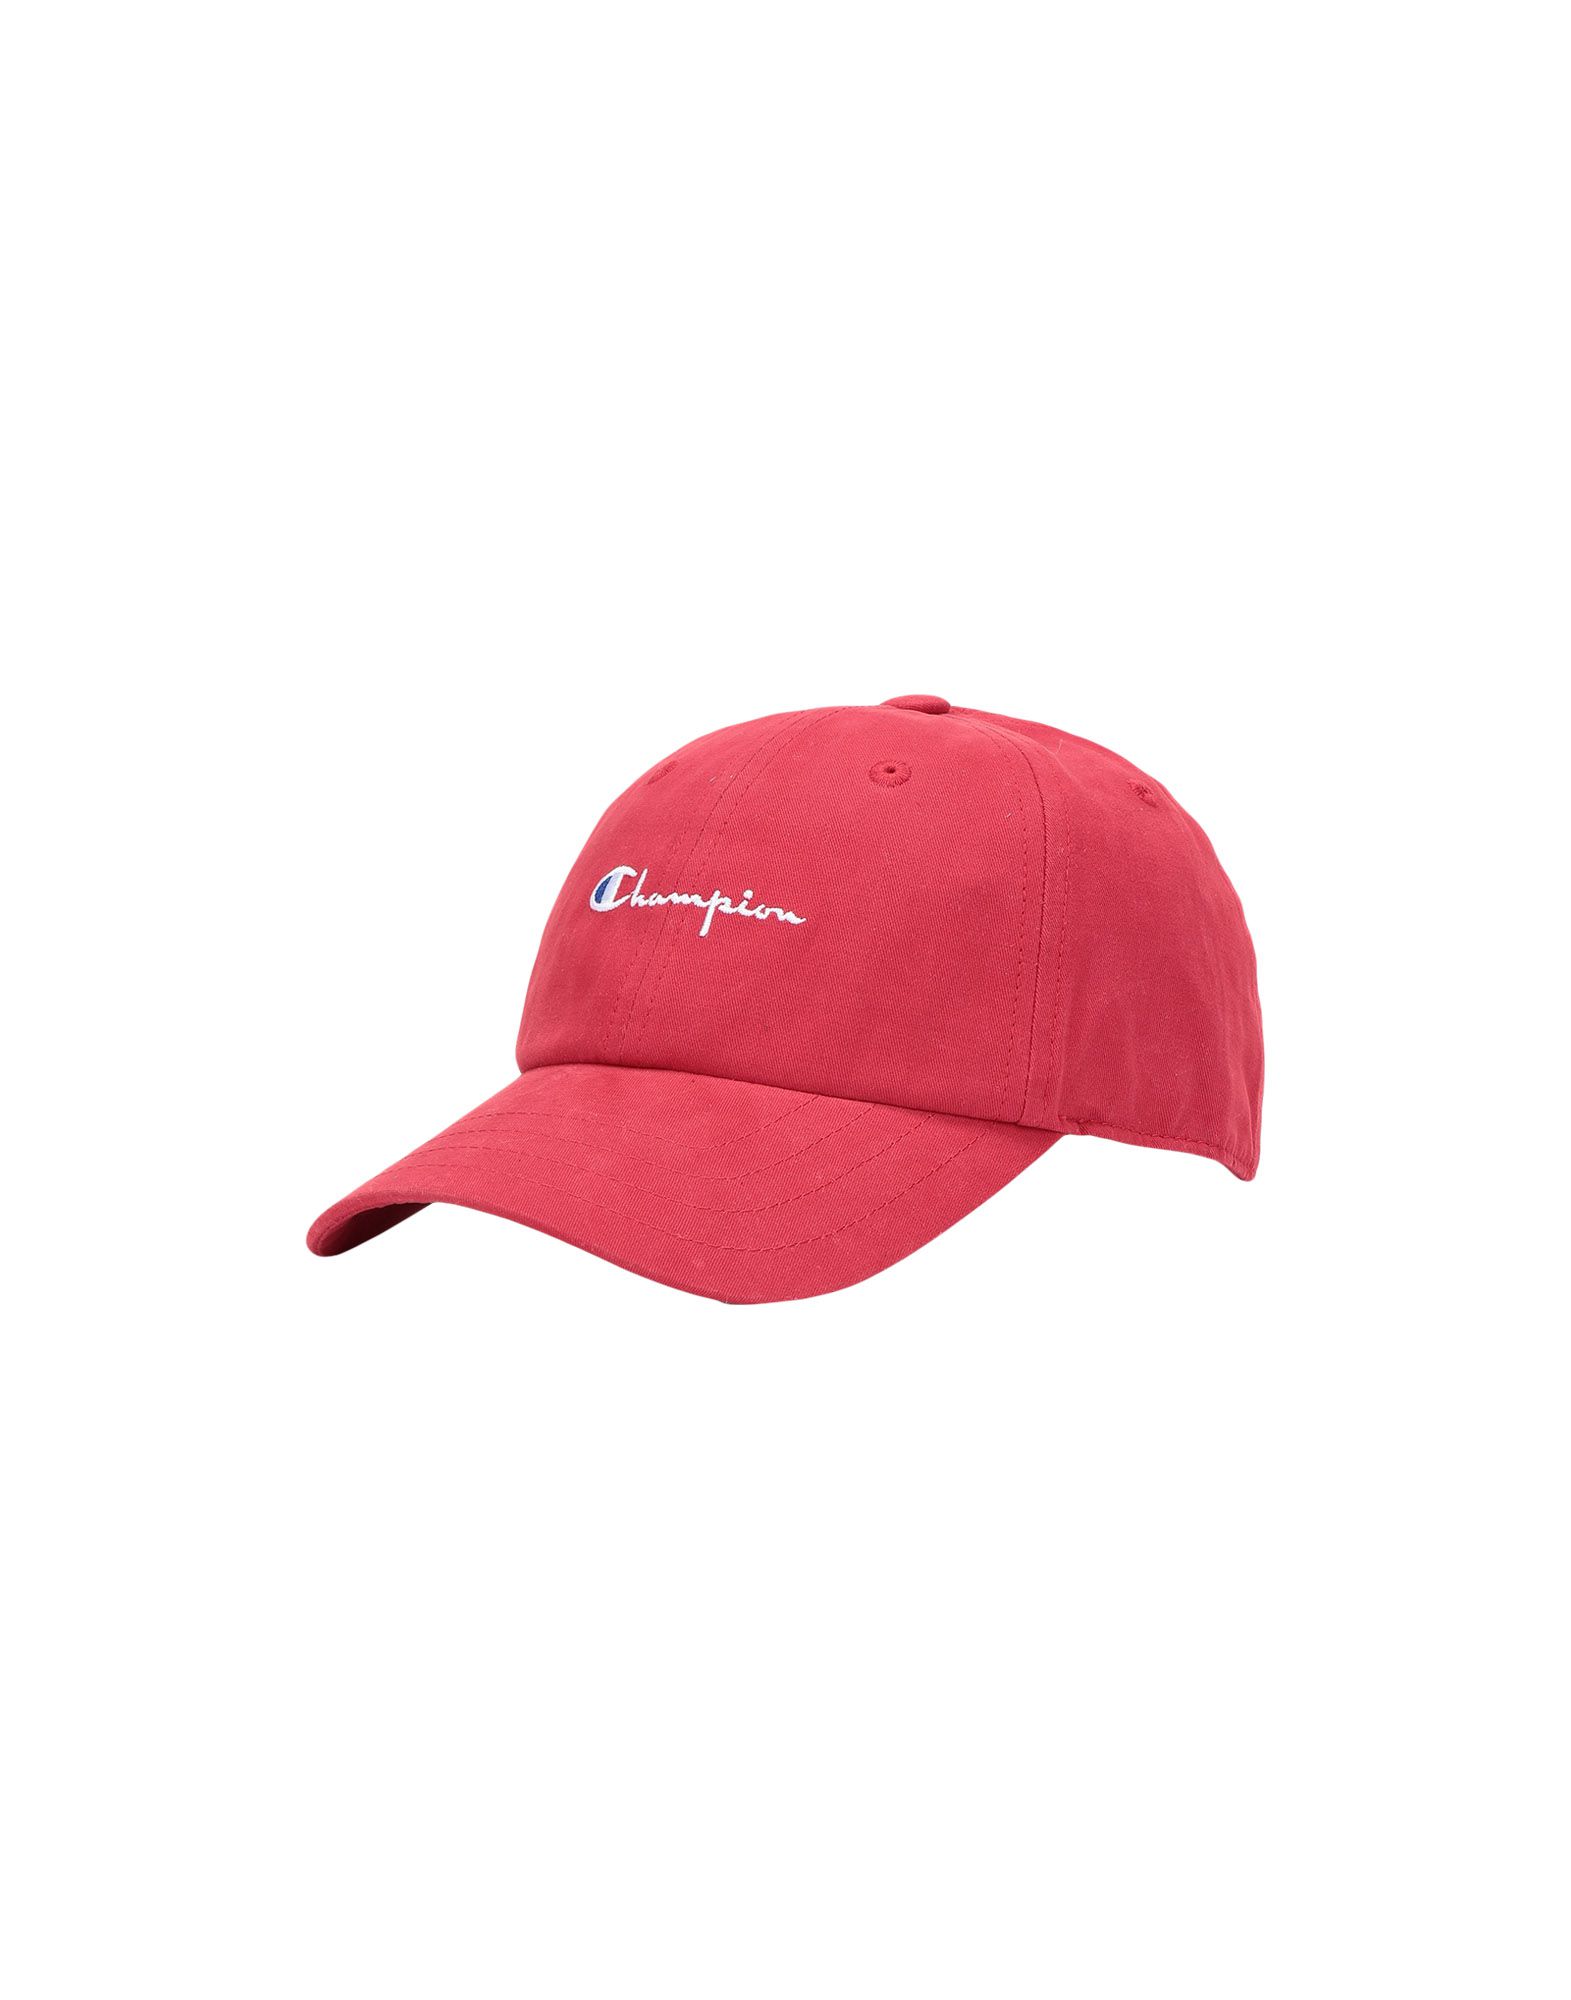 red champion hat